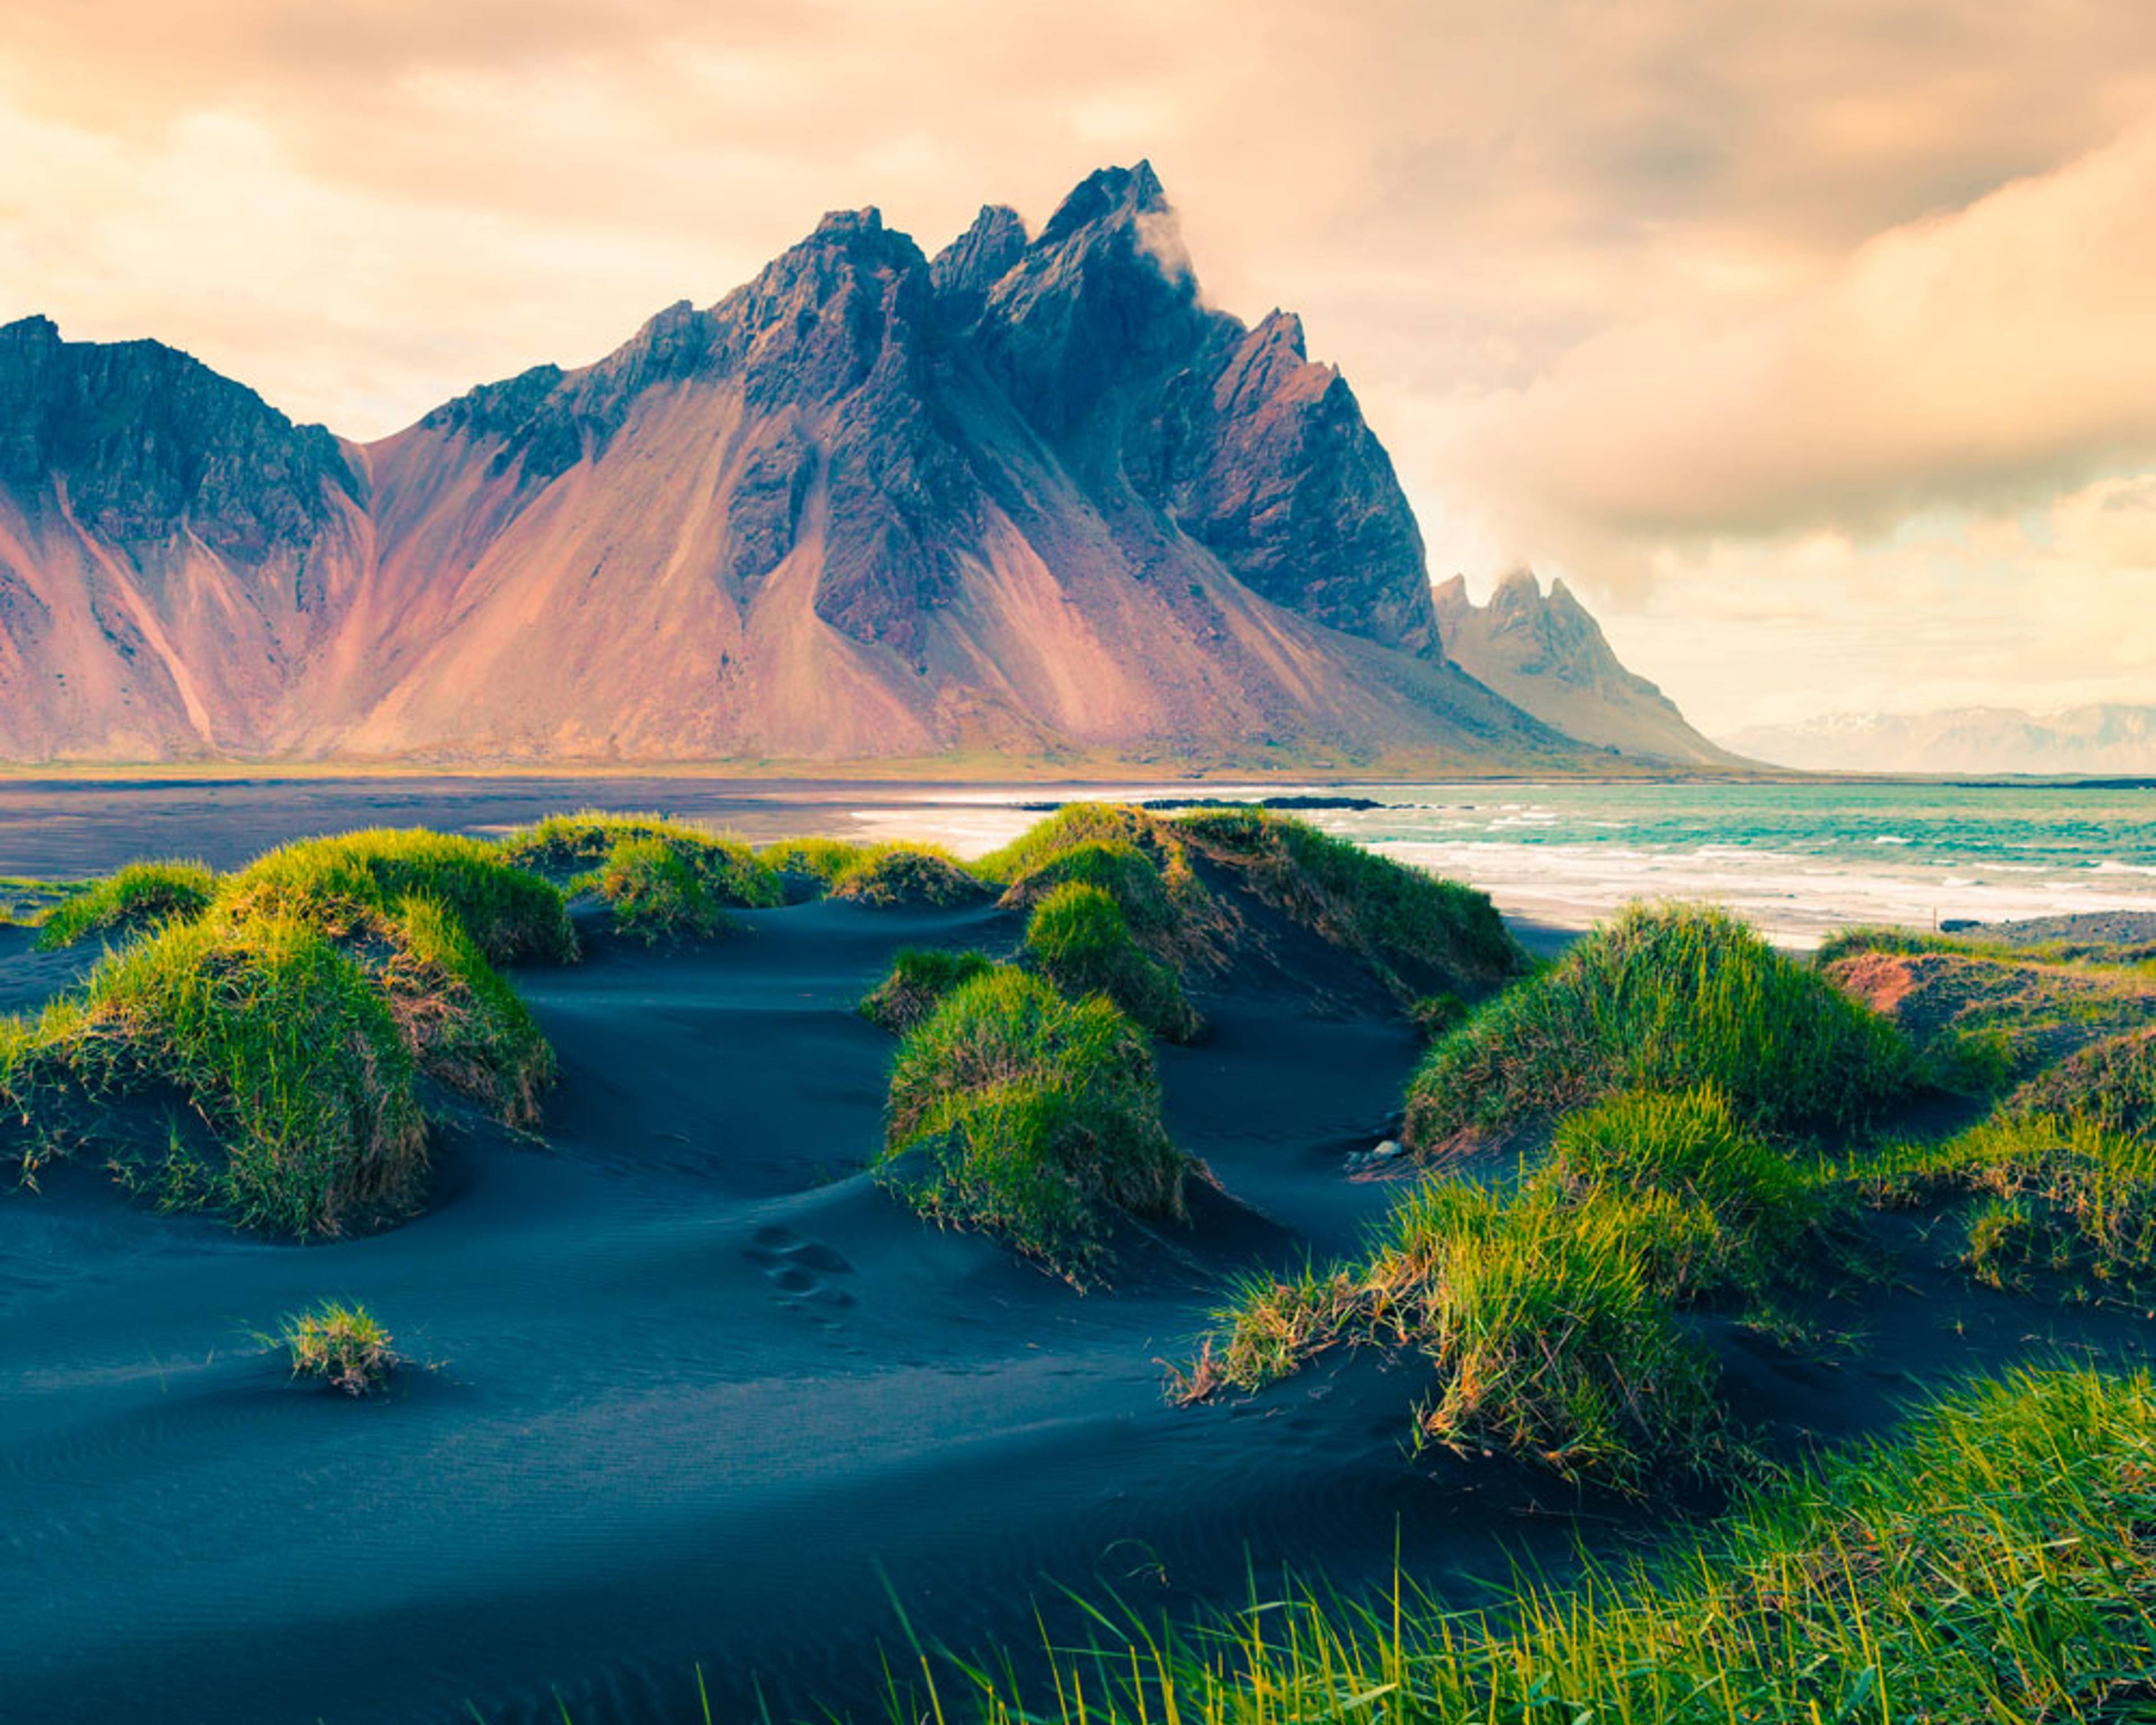 Votre voyage dans la nature en Islande 100% sur-mesure